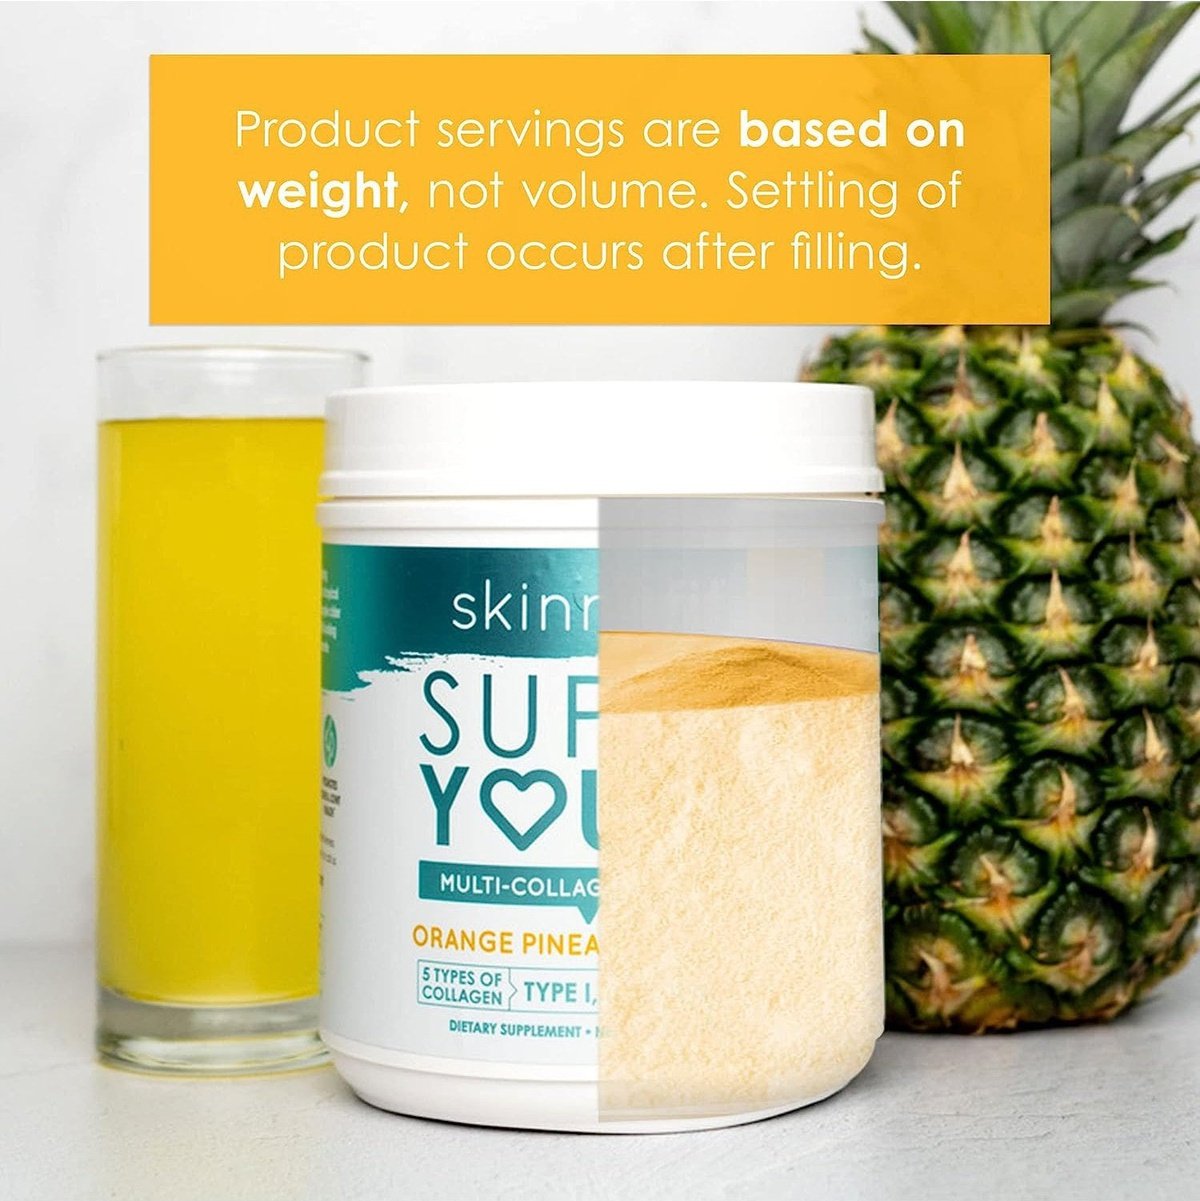 SkinnyFit Super Youth Multi-Collagen Peptides Orange Pineapple NEW Skinny Fit